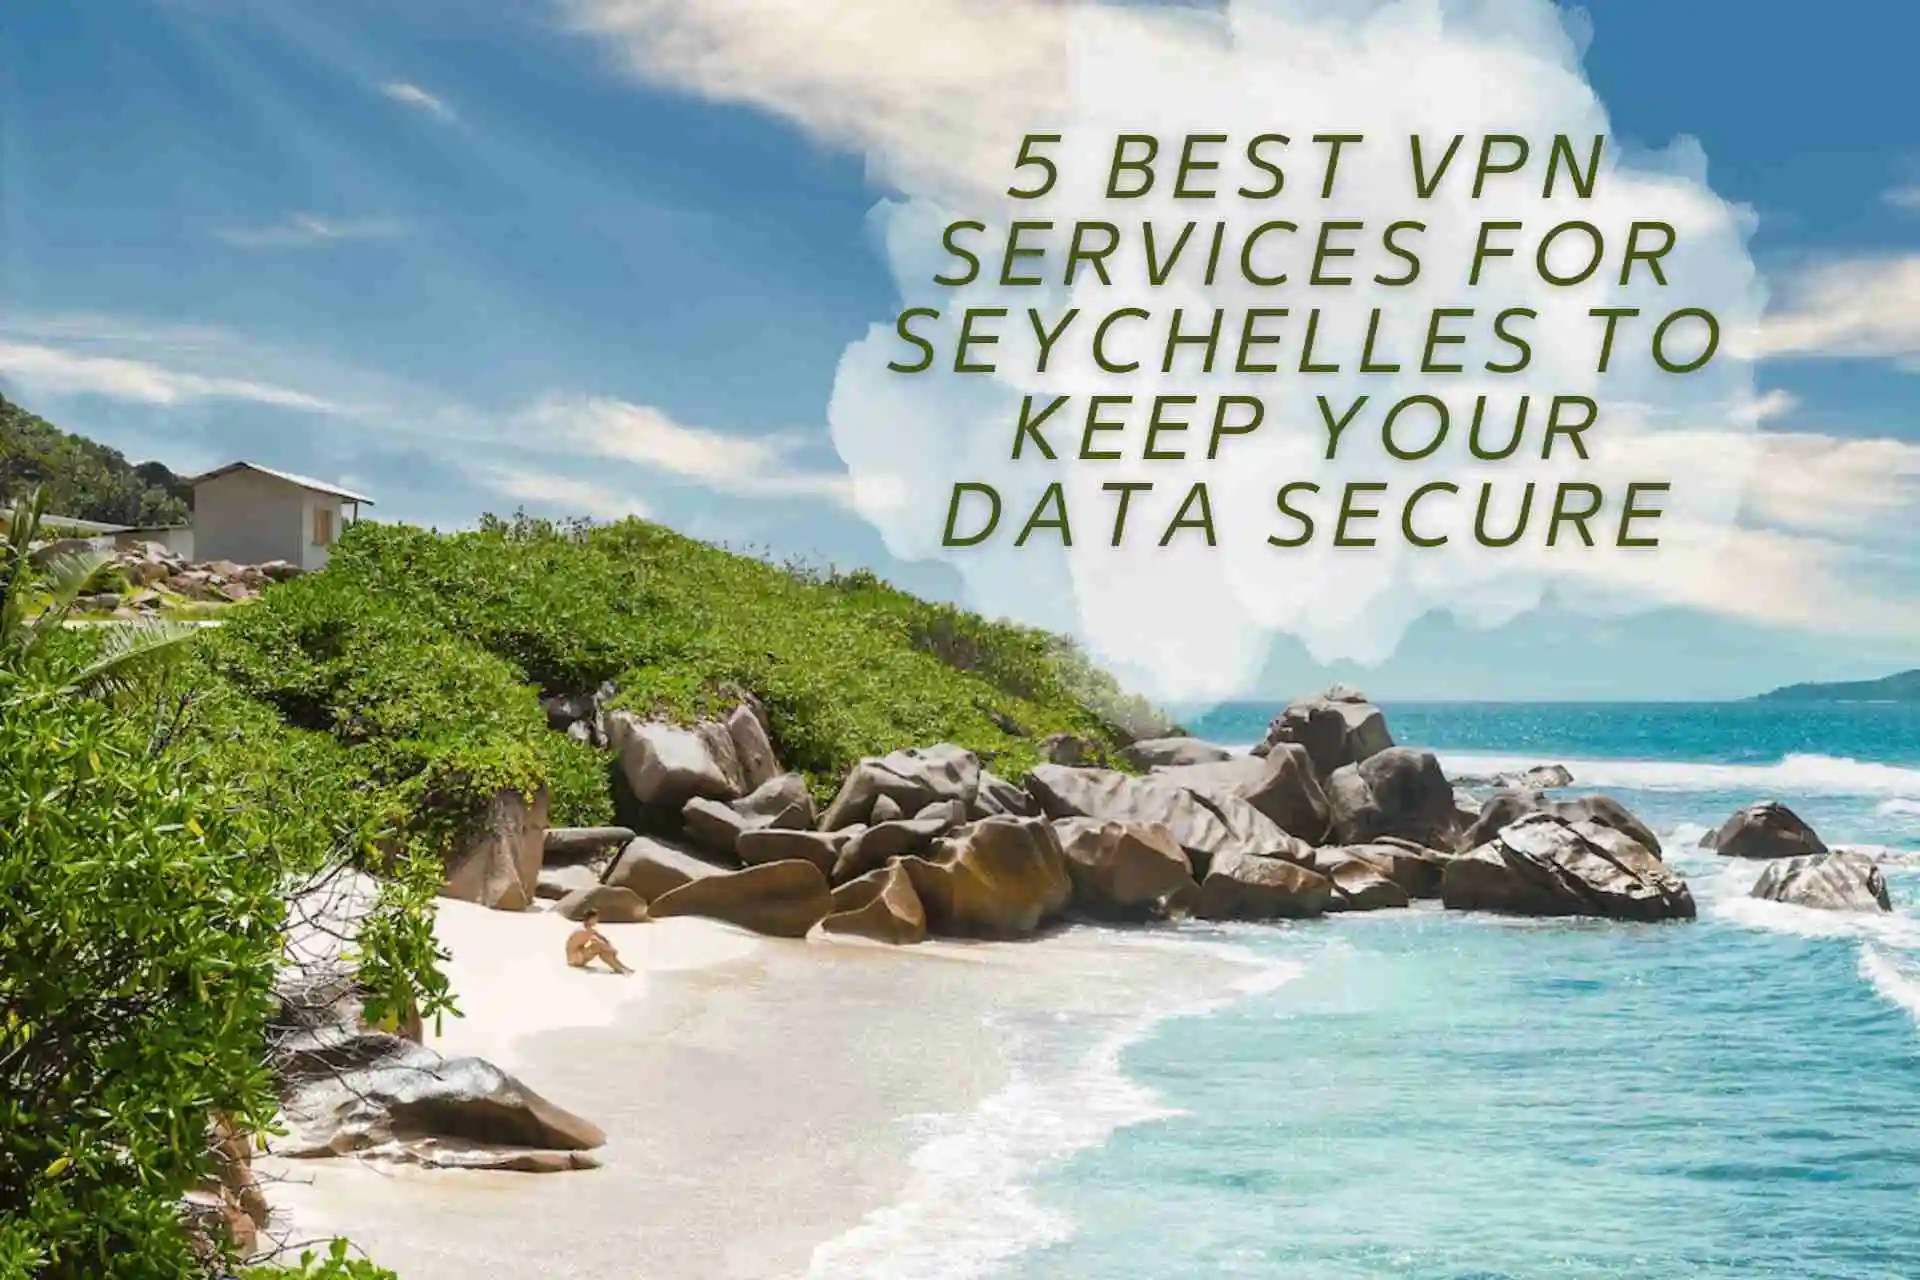 Seychelles VPN